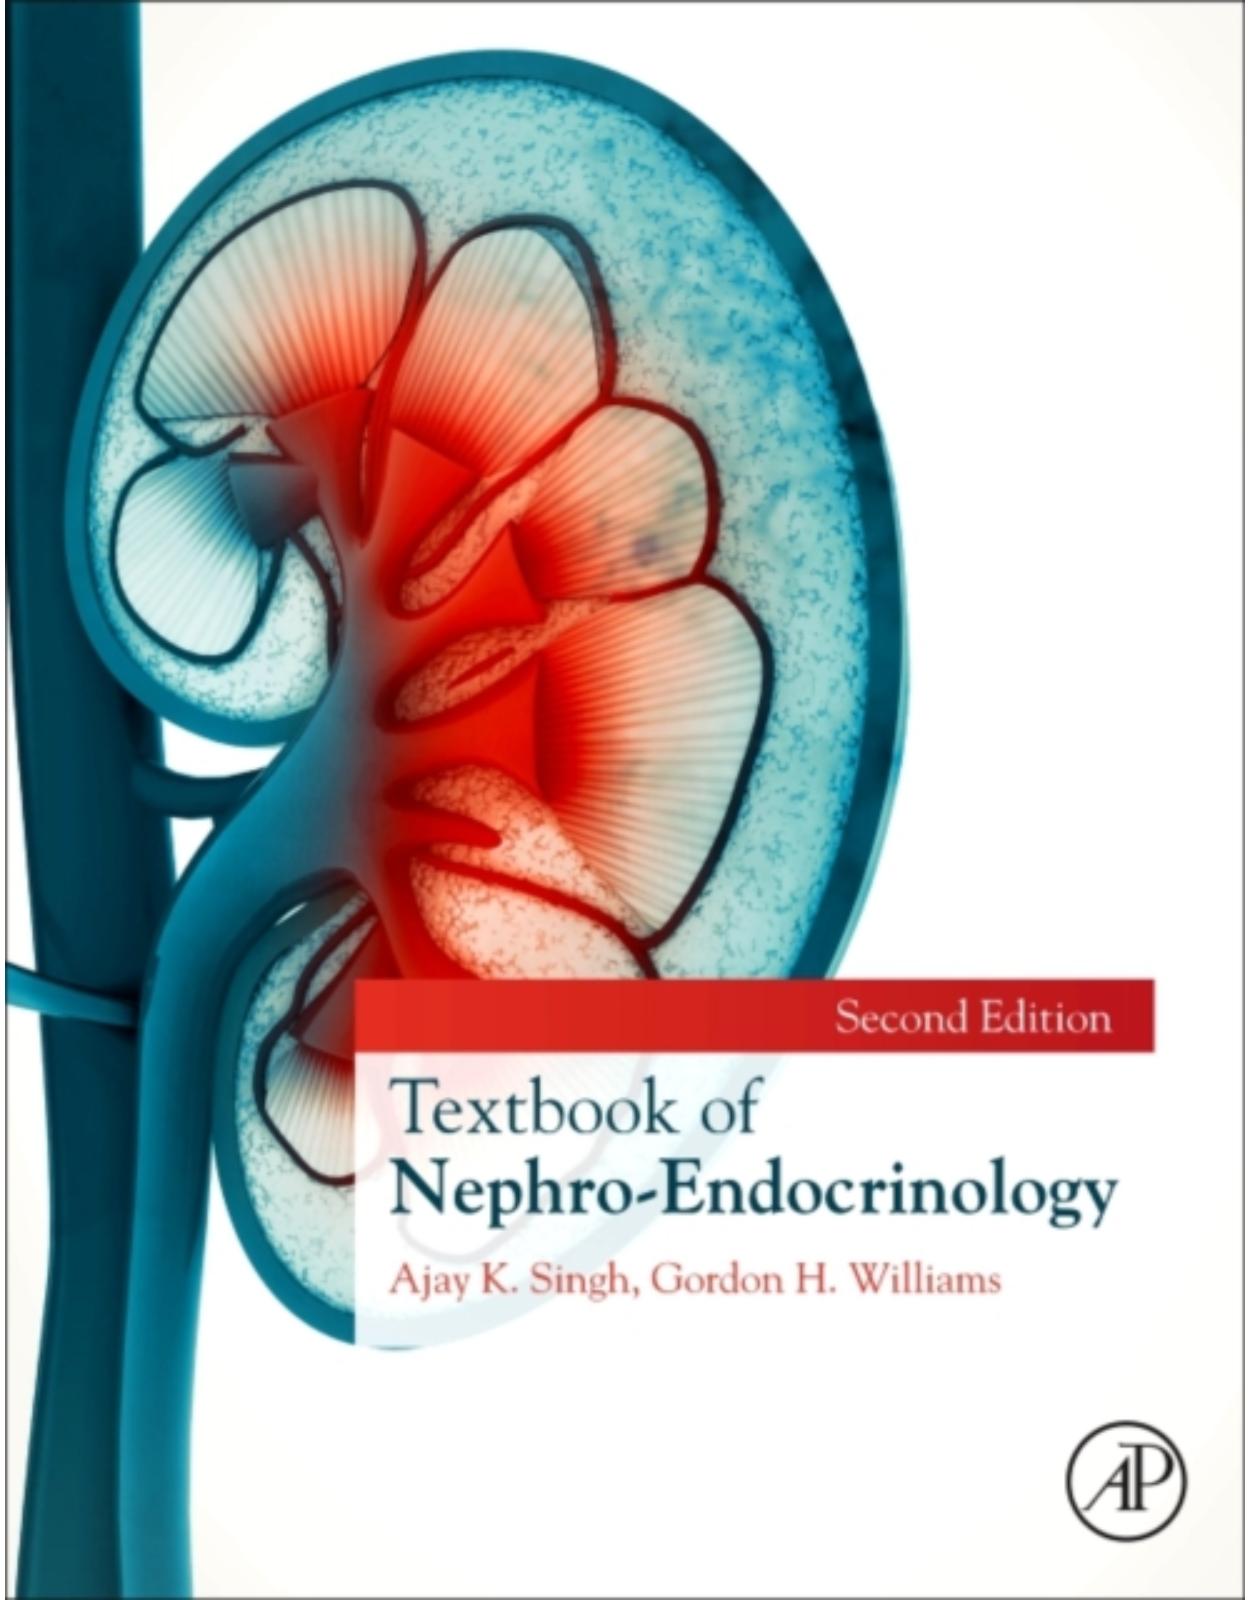 Textbook of Nephro-Endocrinology